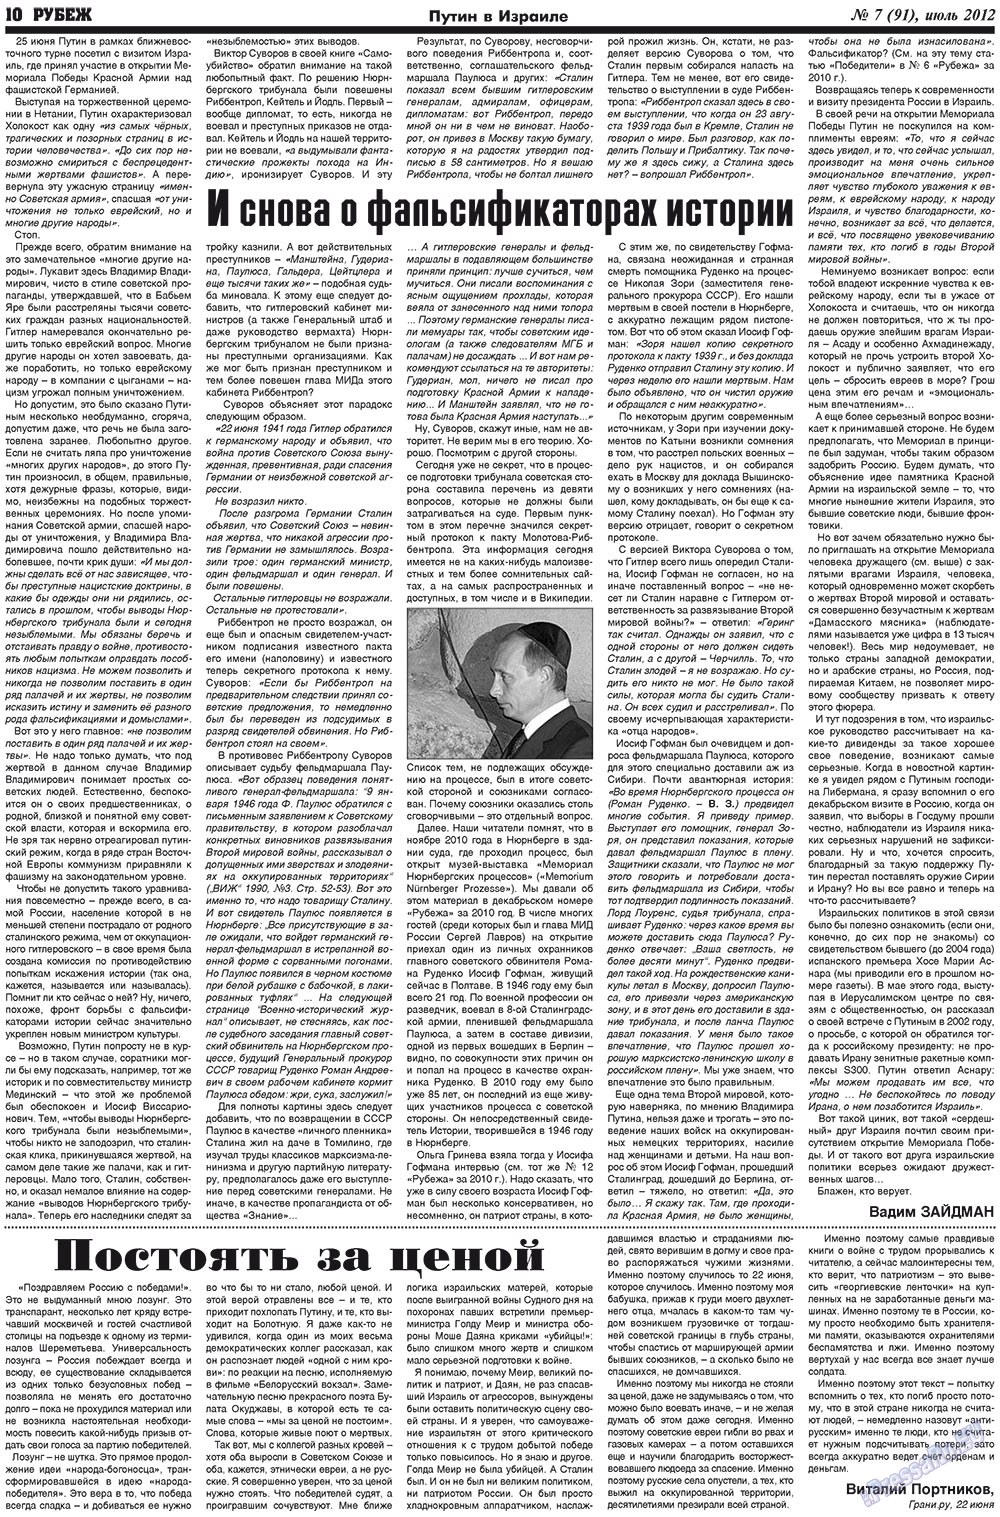 Рубеж, газета. 2012 №7 стр.10